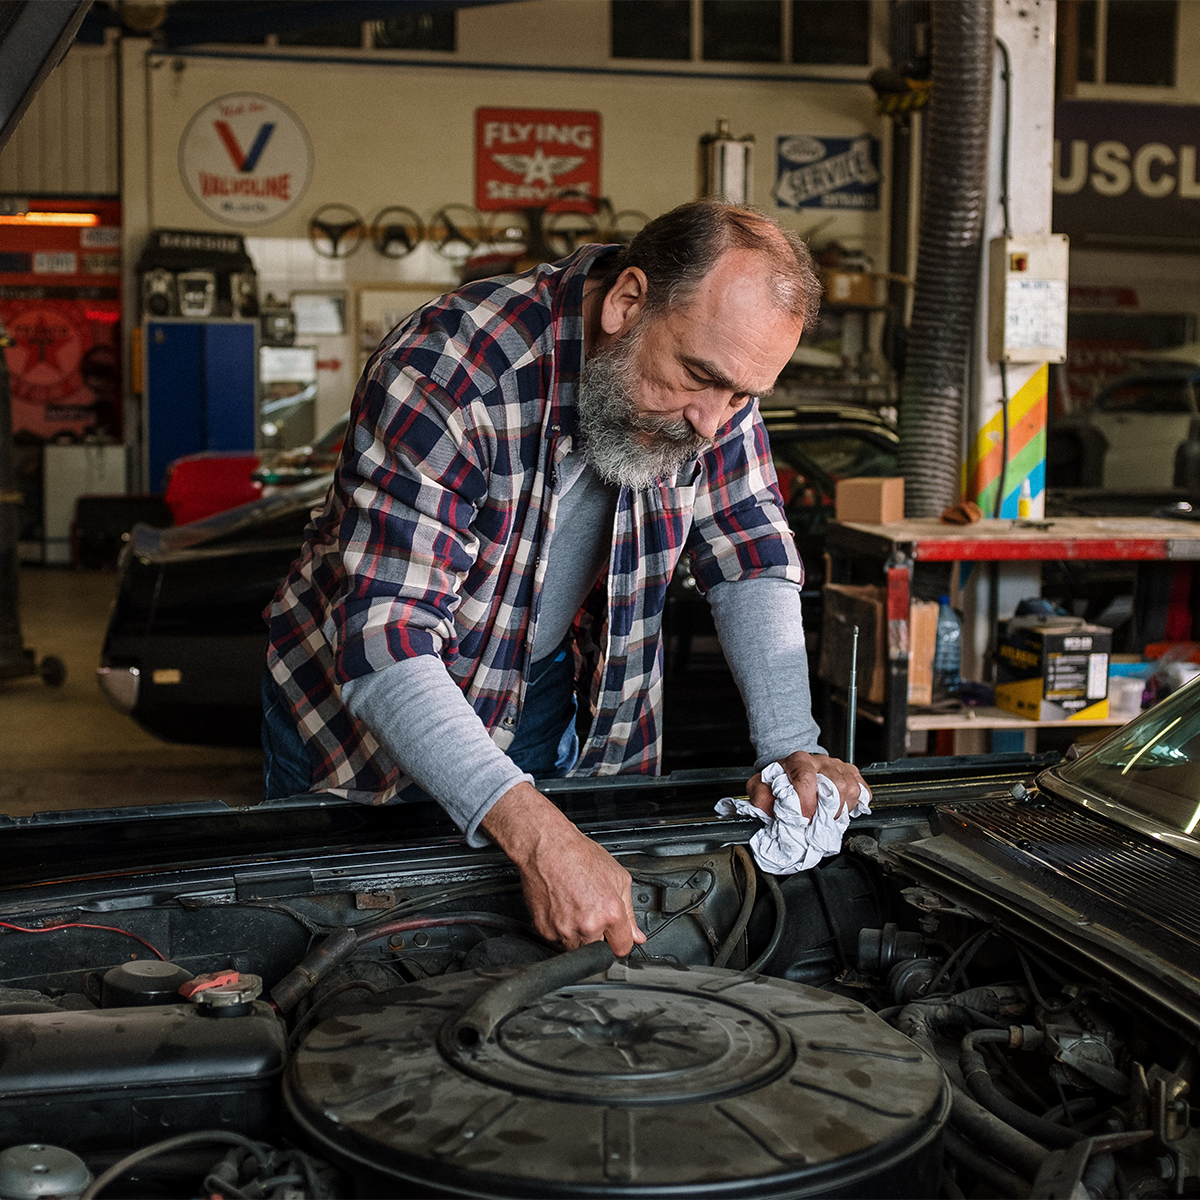 Hampton Auto Garage owner repairing a vintage car in his garage